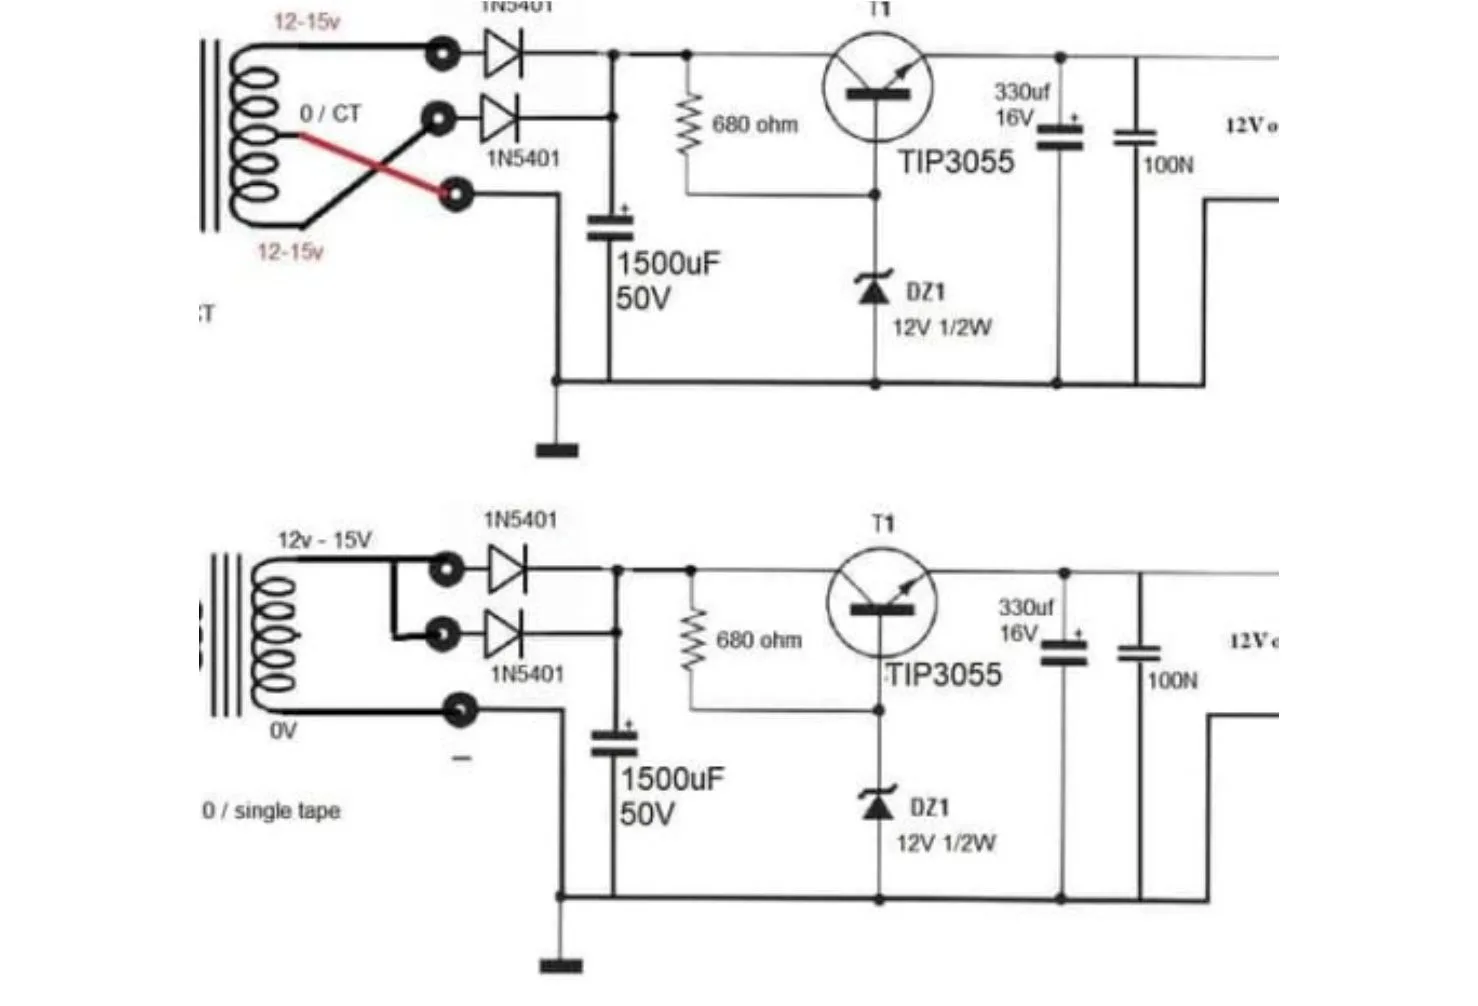 rangkaian power supply tip3055